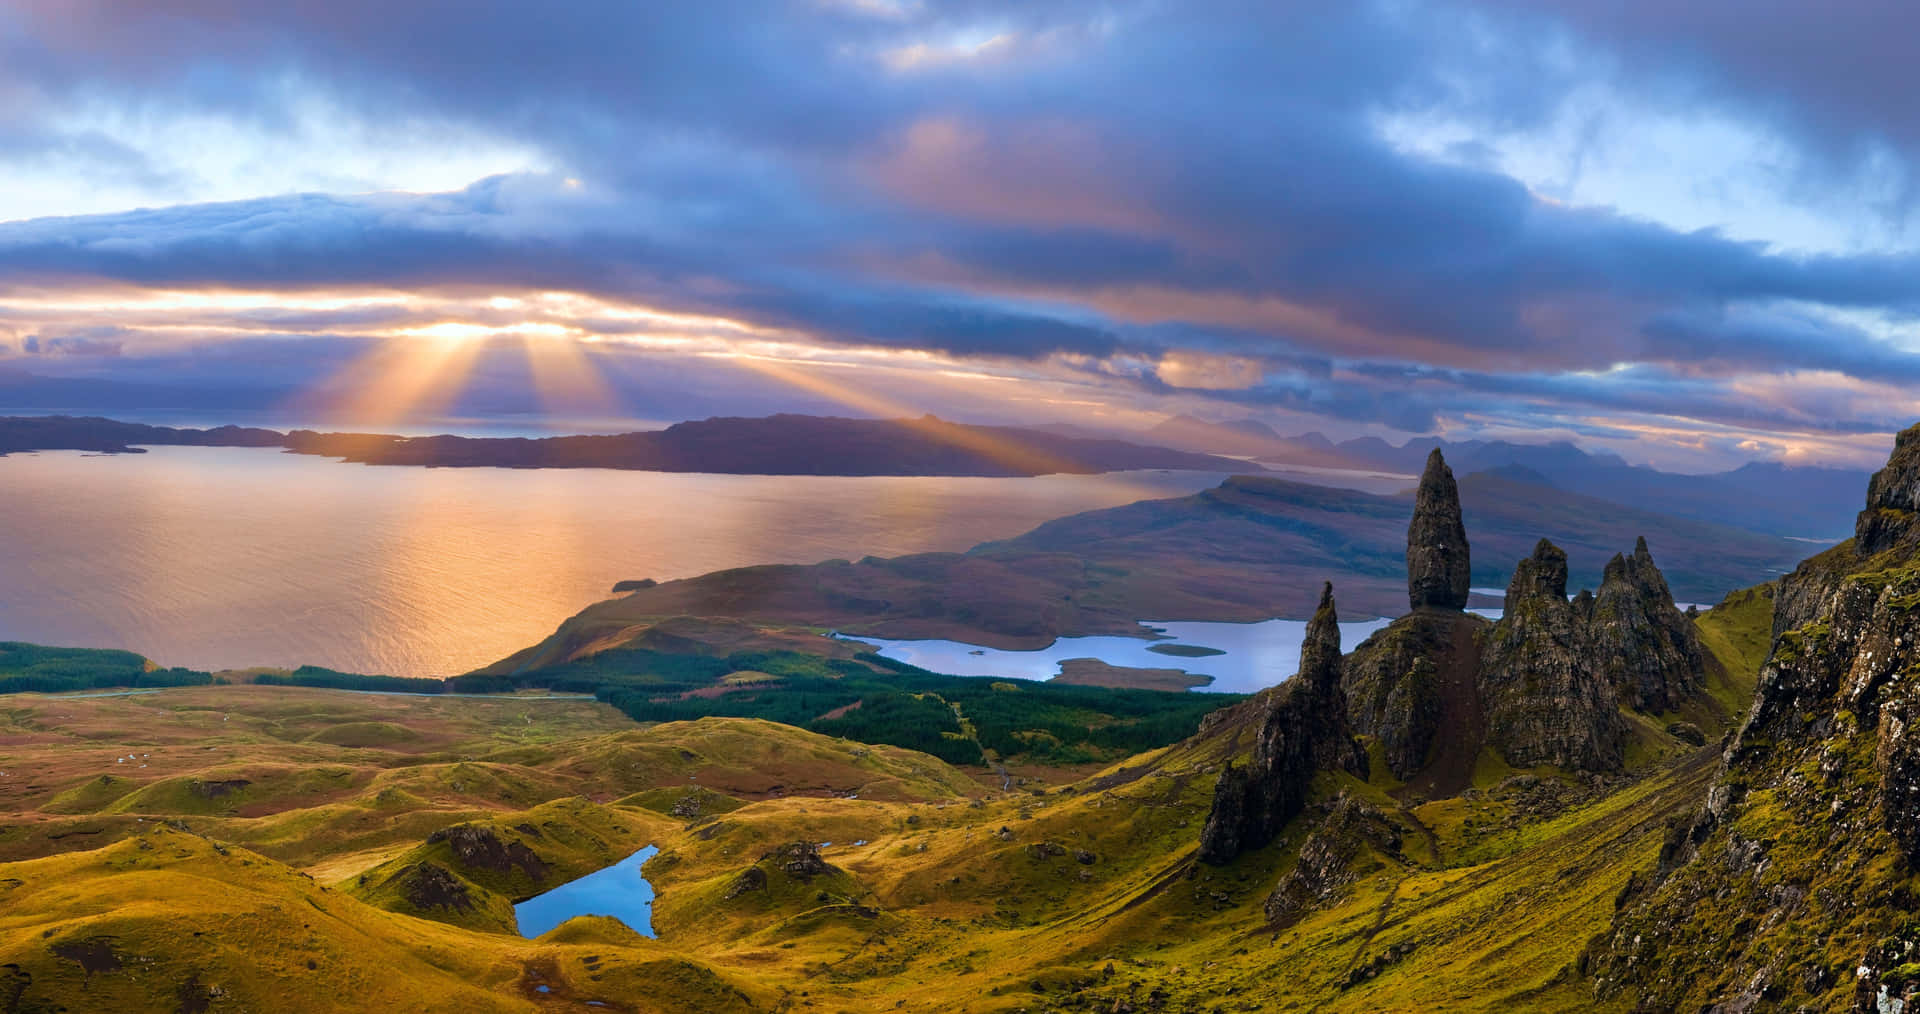 Caption: Majestic Scottish Highlands with a Scenic Lake